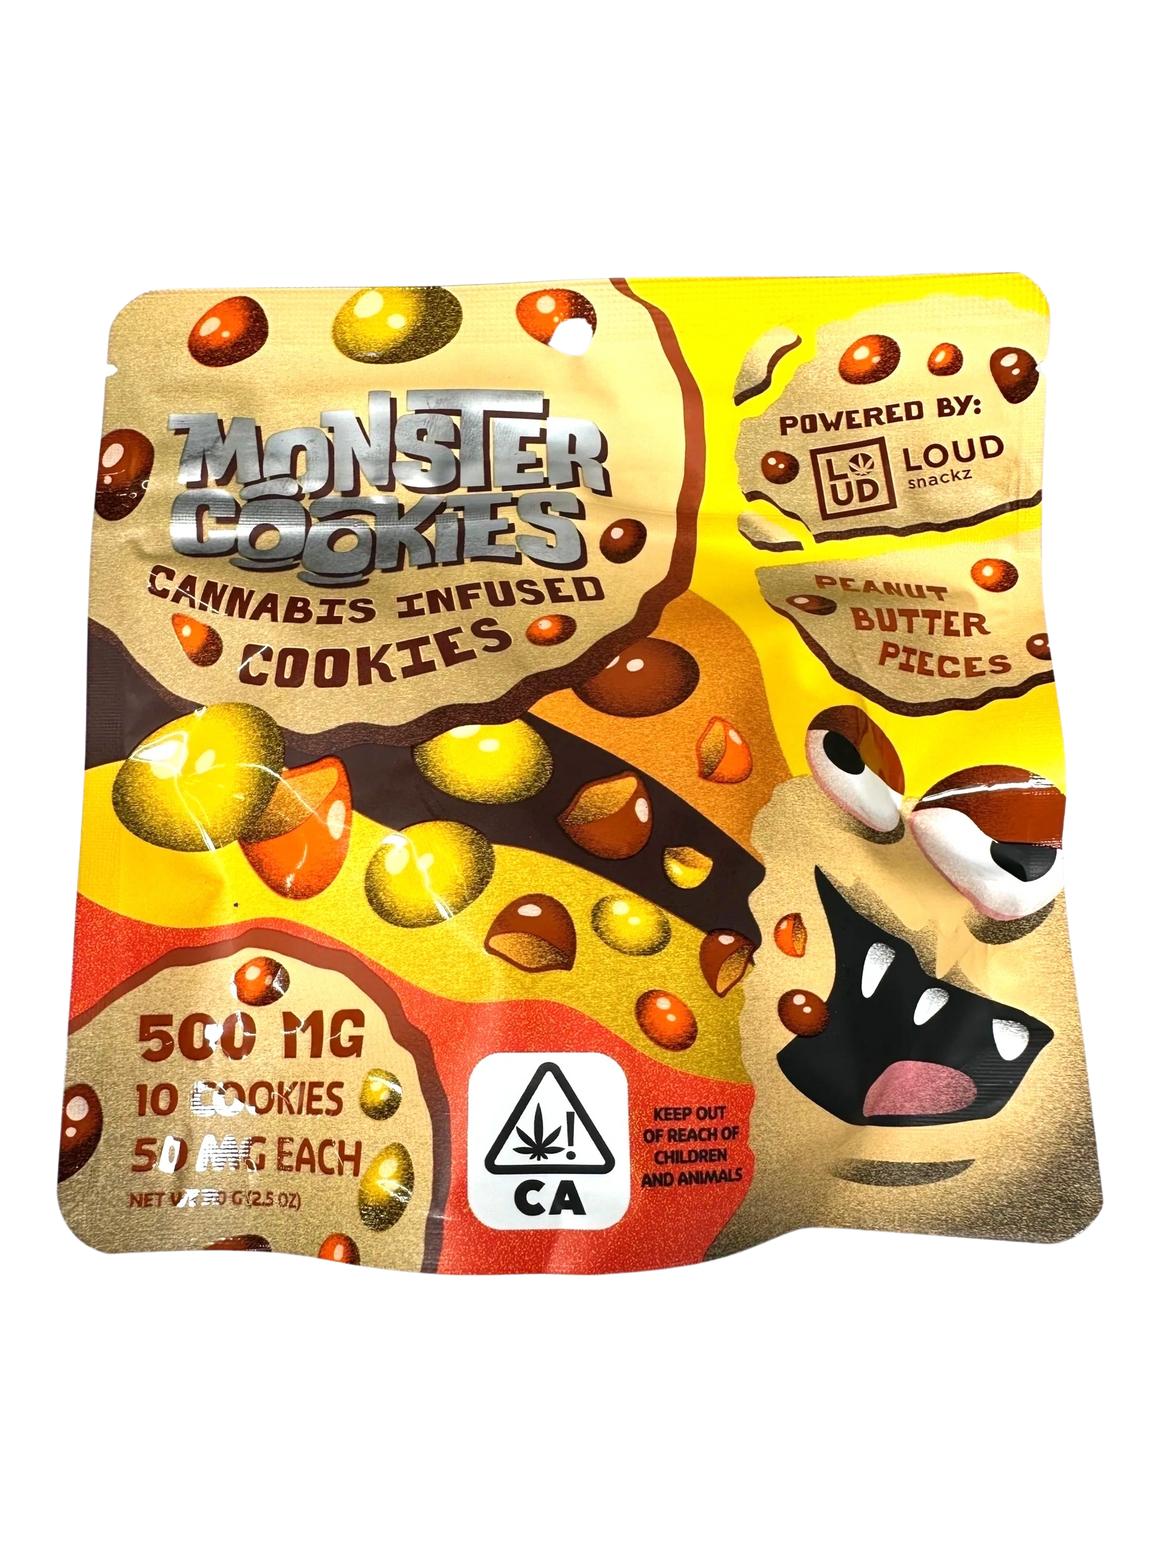 Monster Cookies ( Peanut Butter Pieces )